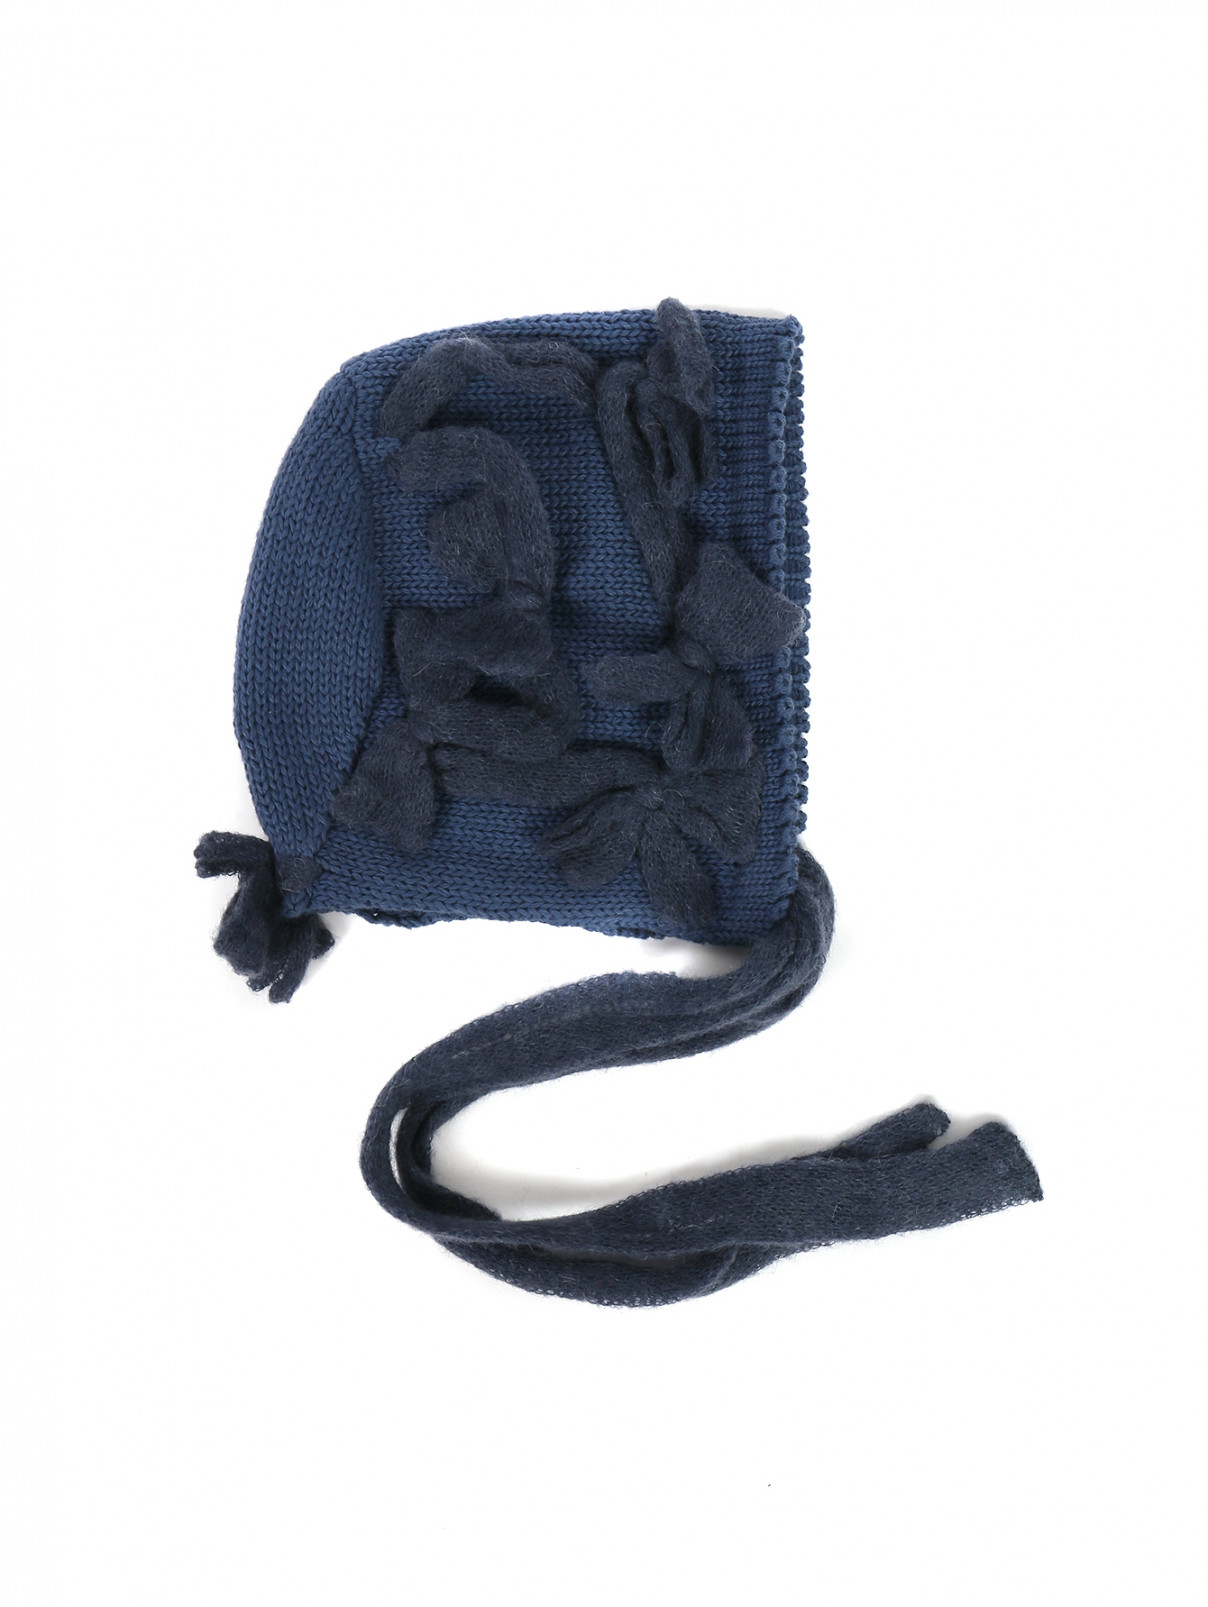 Шапка из хлопка с бантами на завязках I Pinco Pallino  –  Общий вид  – Цвет:  Синий